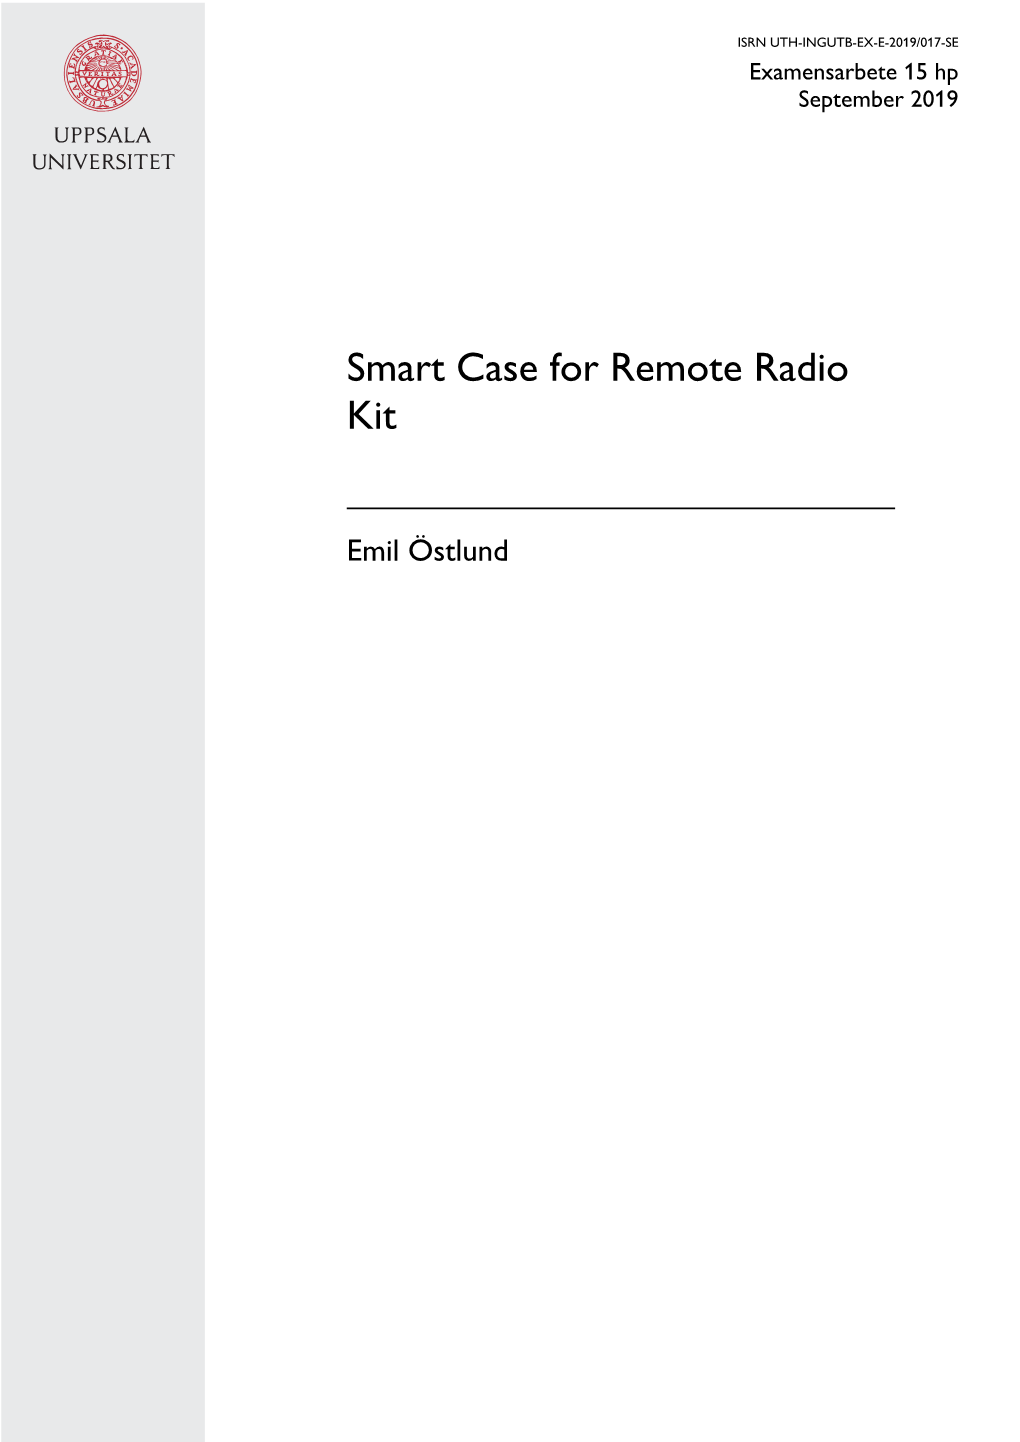 Smart Case for Remote Radio Kit